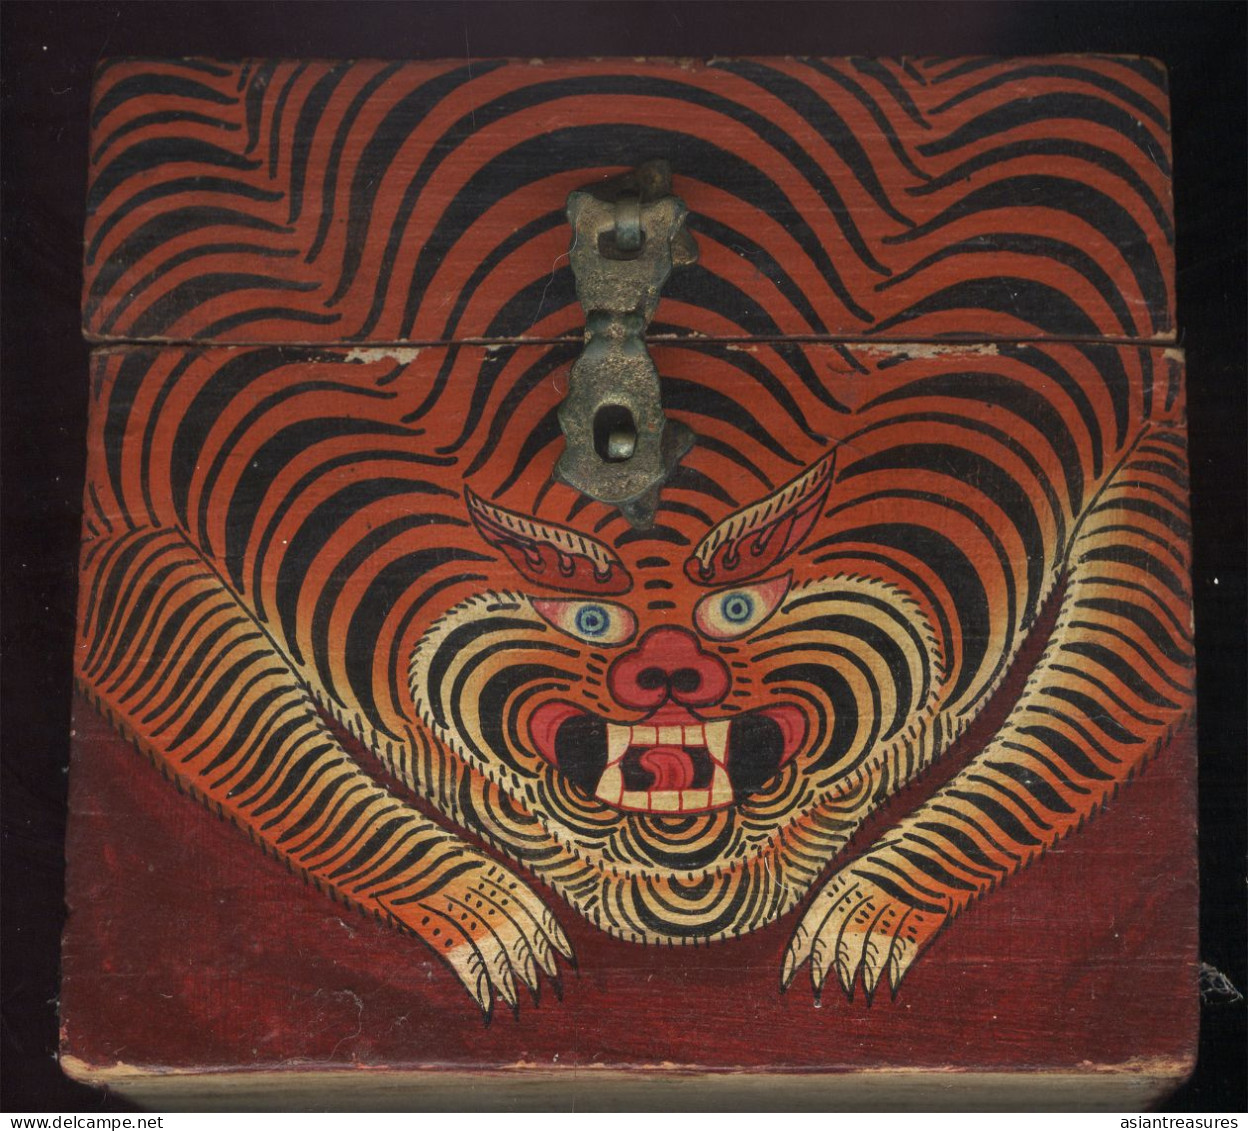 Antique Tibet Treasure Box With Tiger Design Intricate Work - Art Asiatique